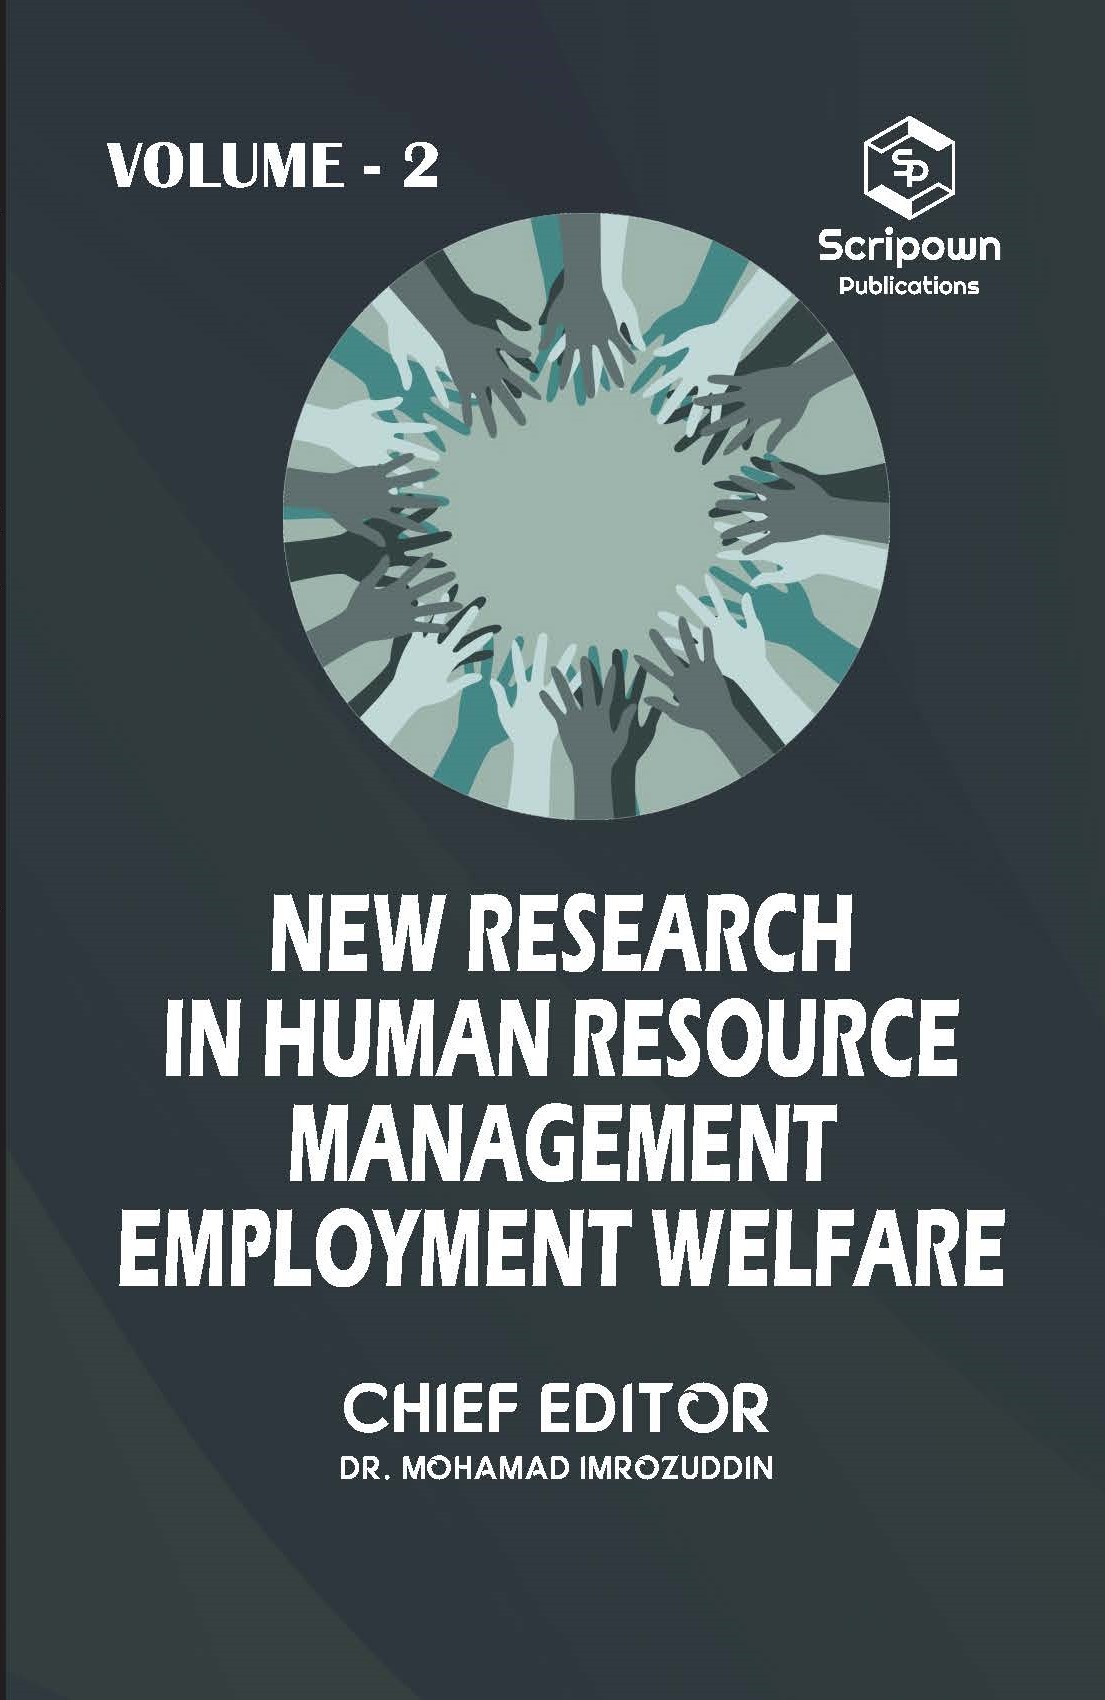 New Research in Human Resource Management & Employment Welfare (Volume - 2)